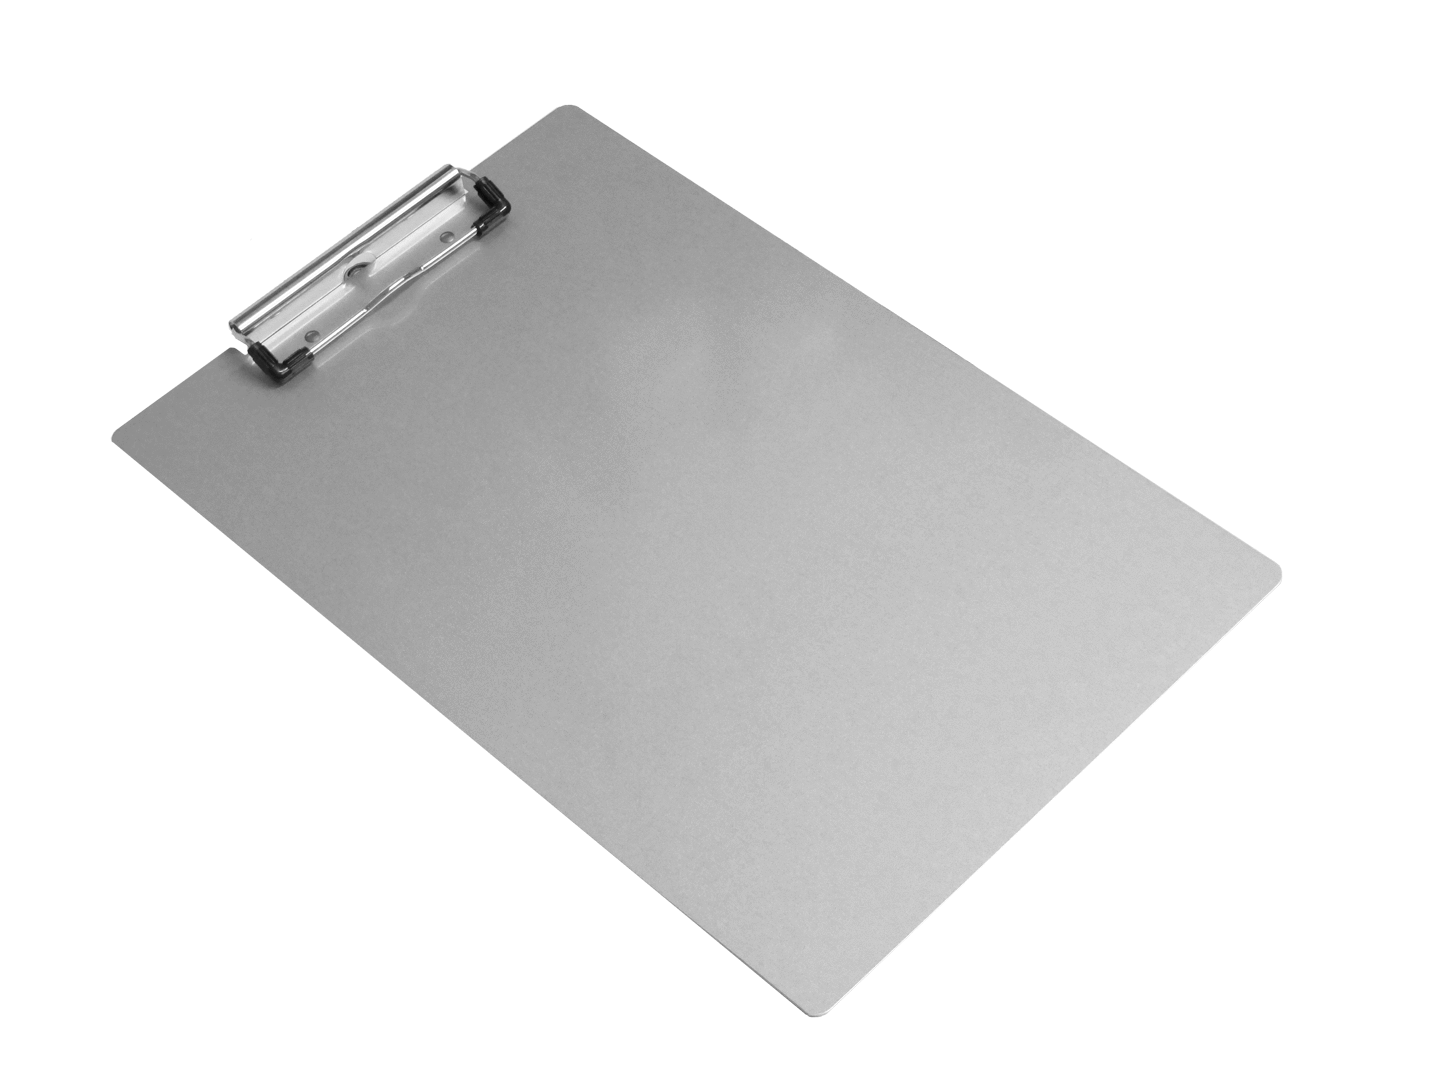 Aluminum clipboard